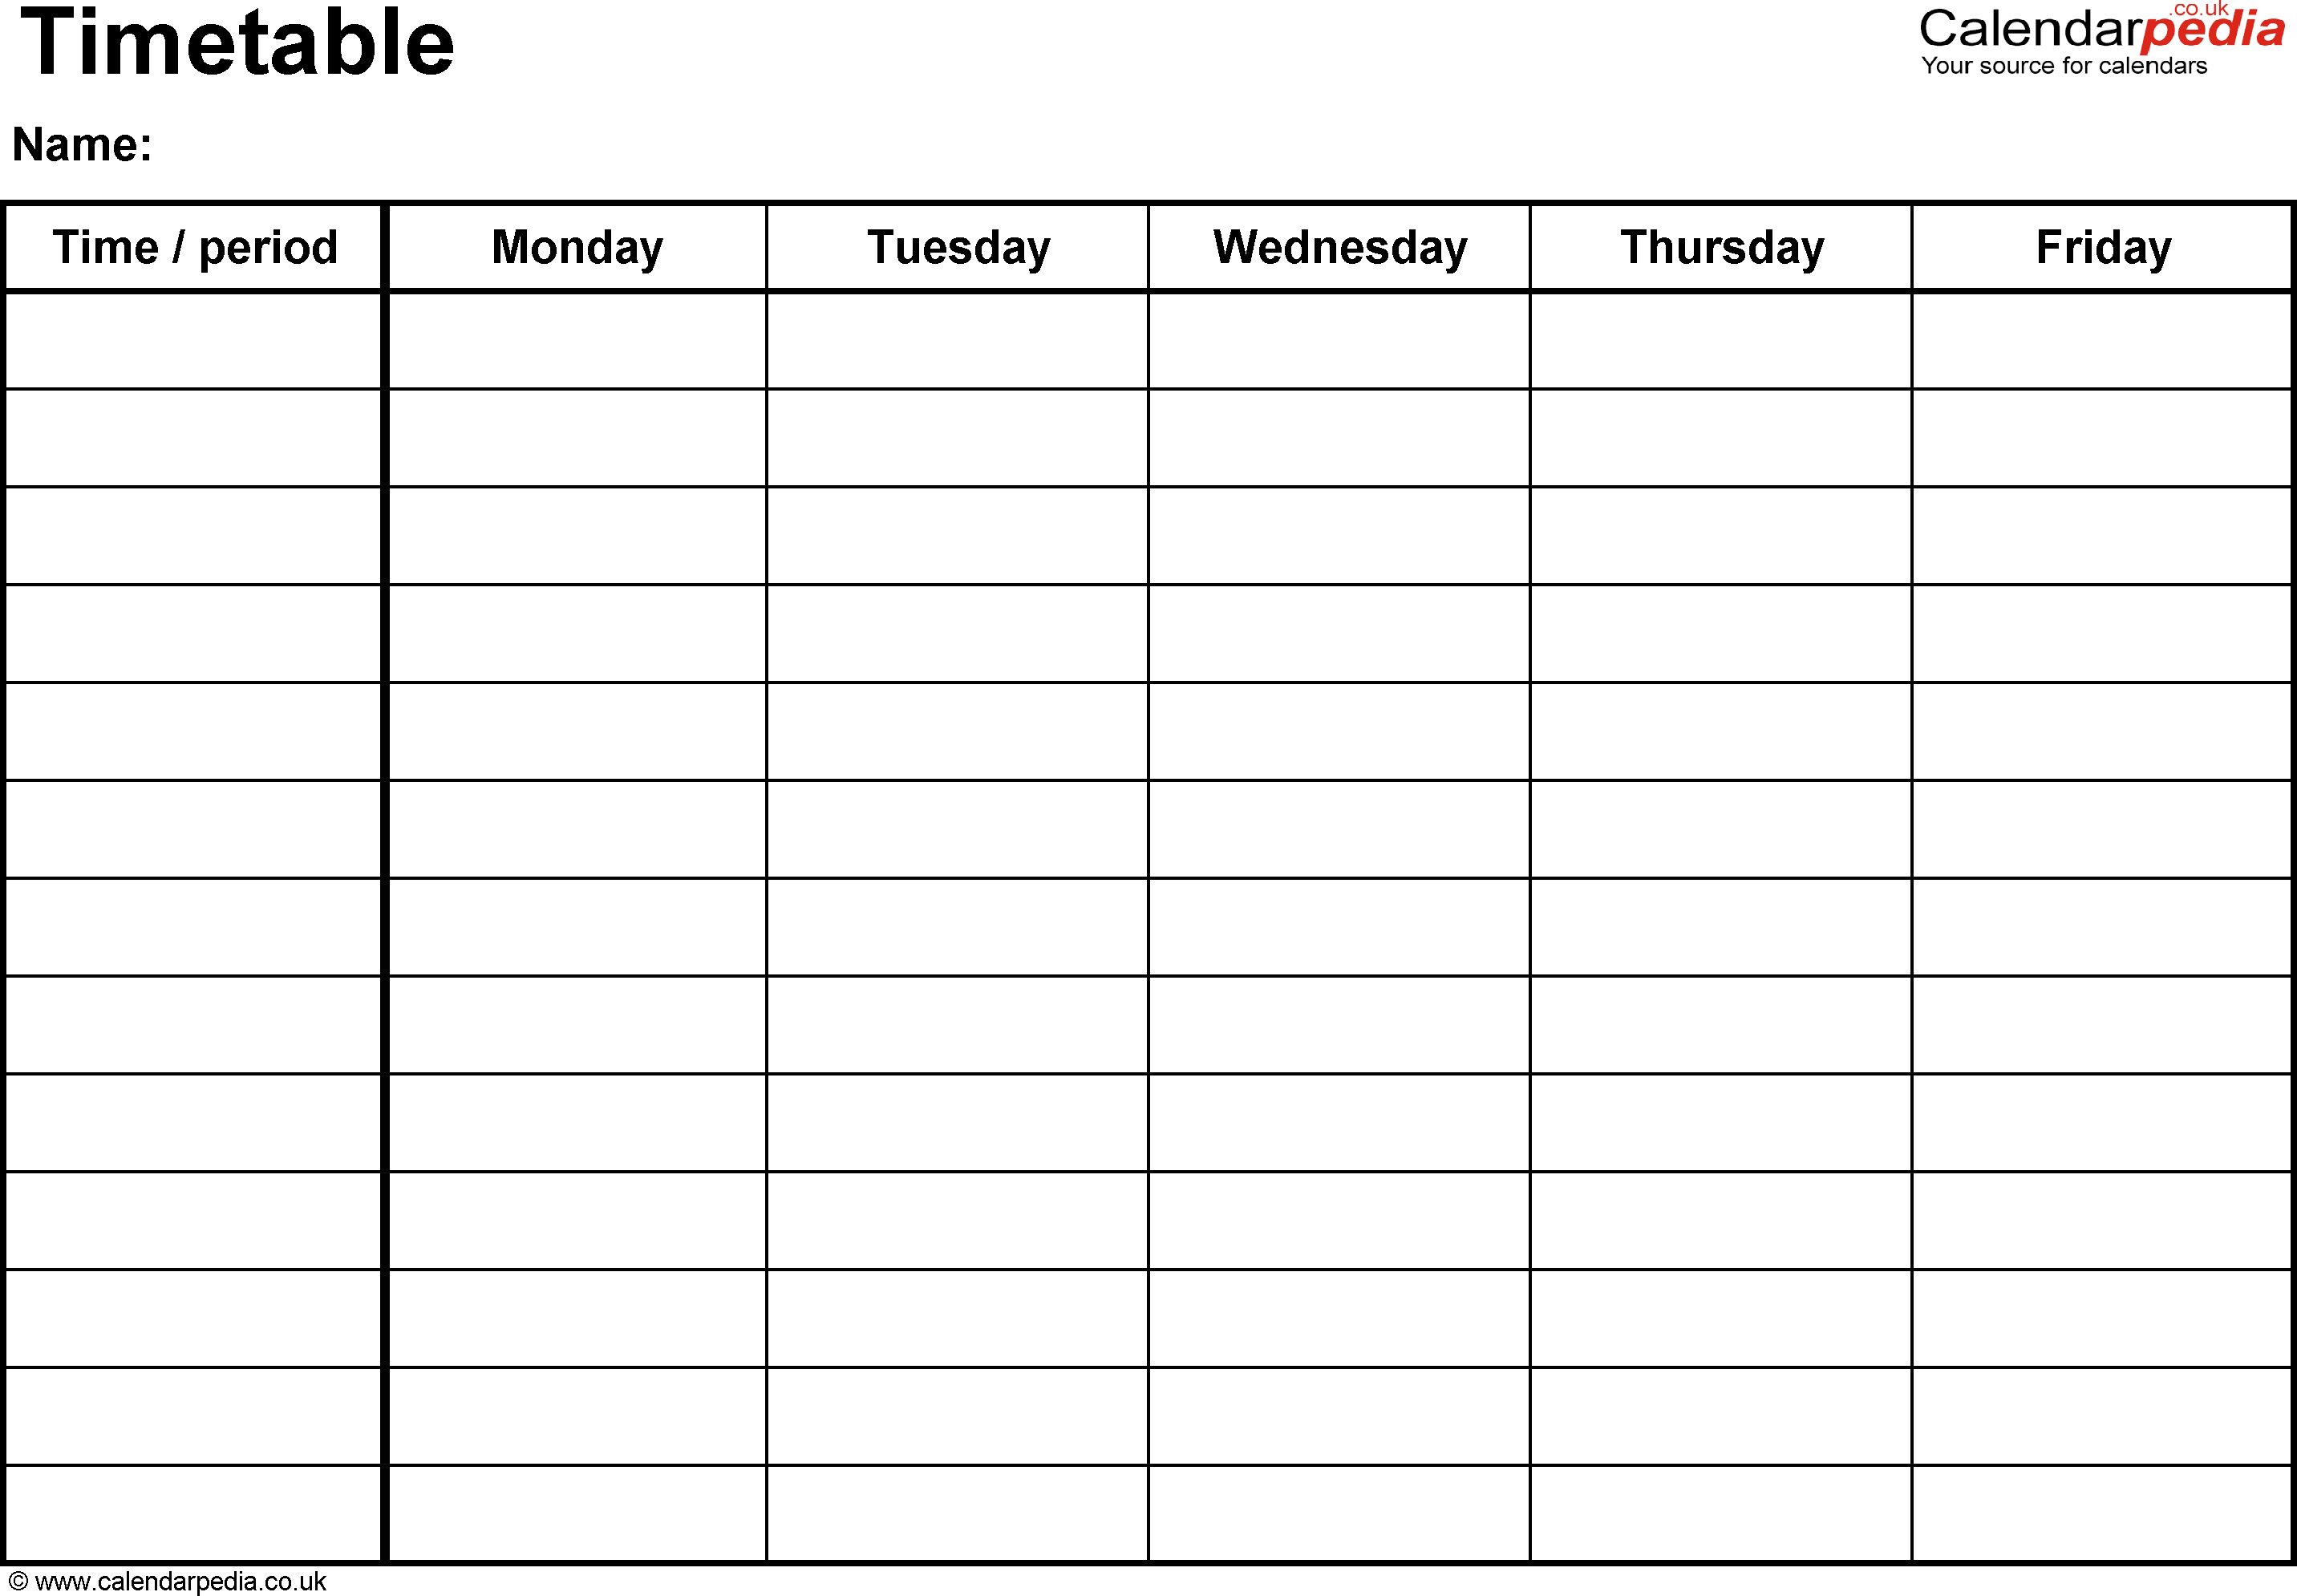 Excel Timetable Template 1: Landscape Format, A4, 1 Page